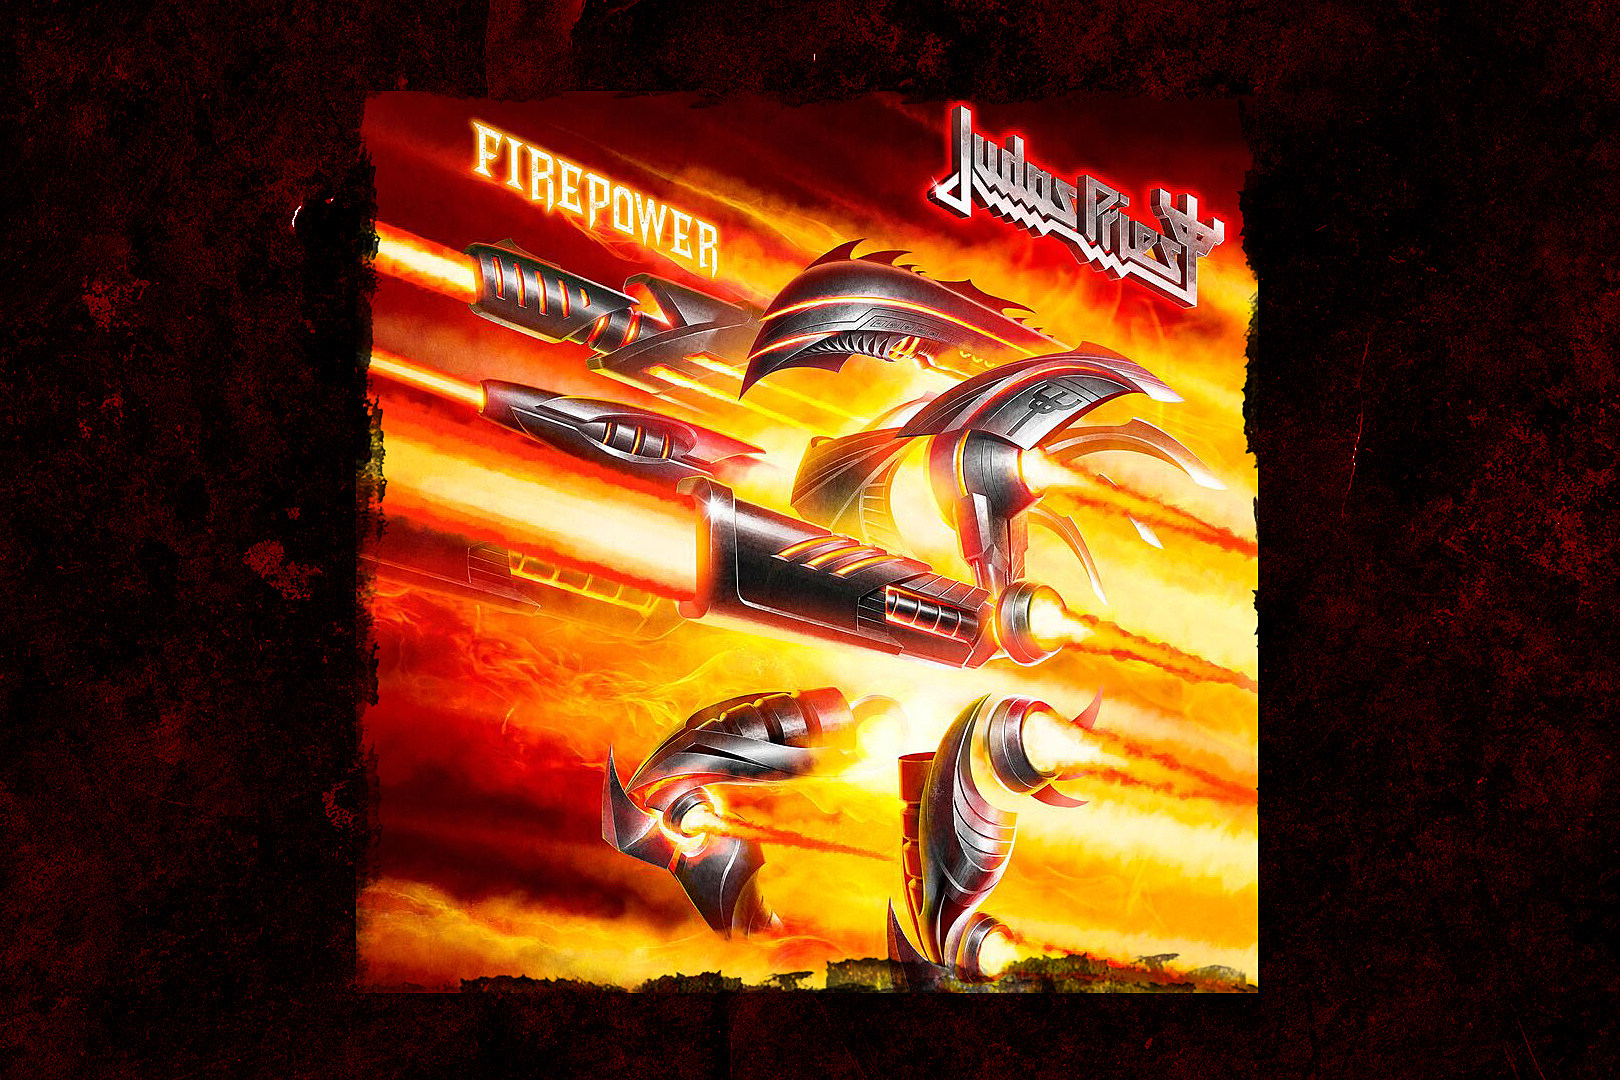 Judas Priest's 'Firepower' Marks a Creative Peak - Album Review